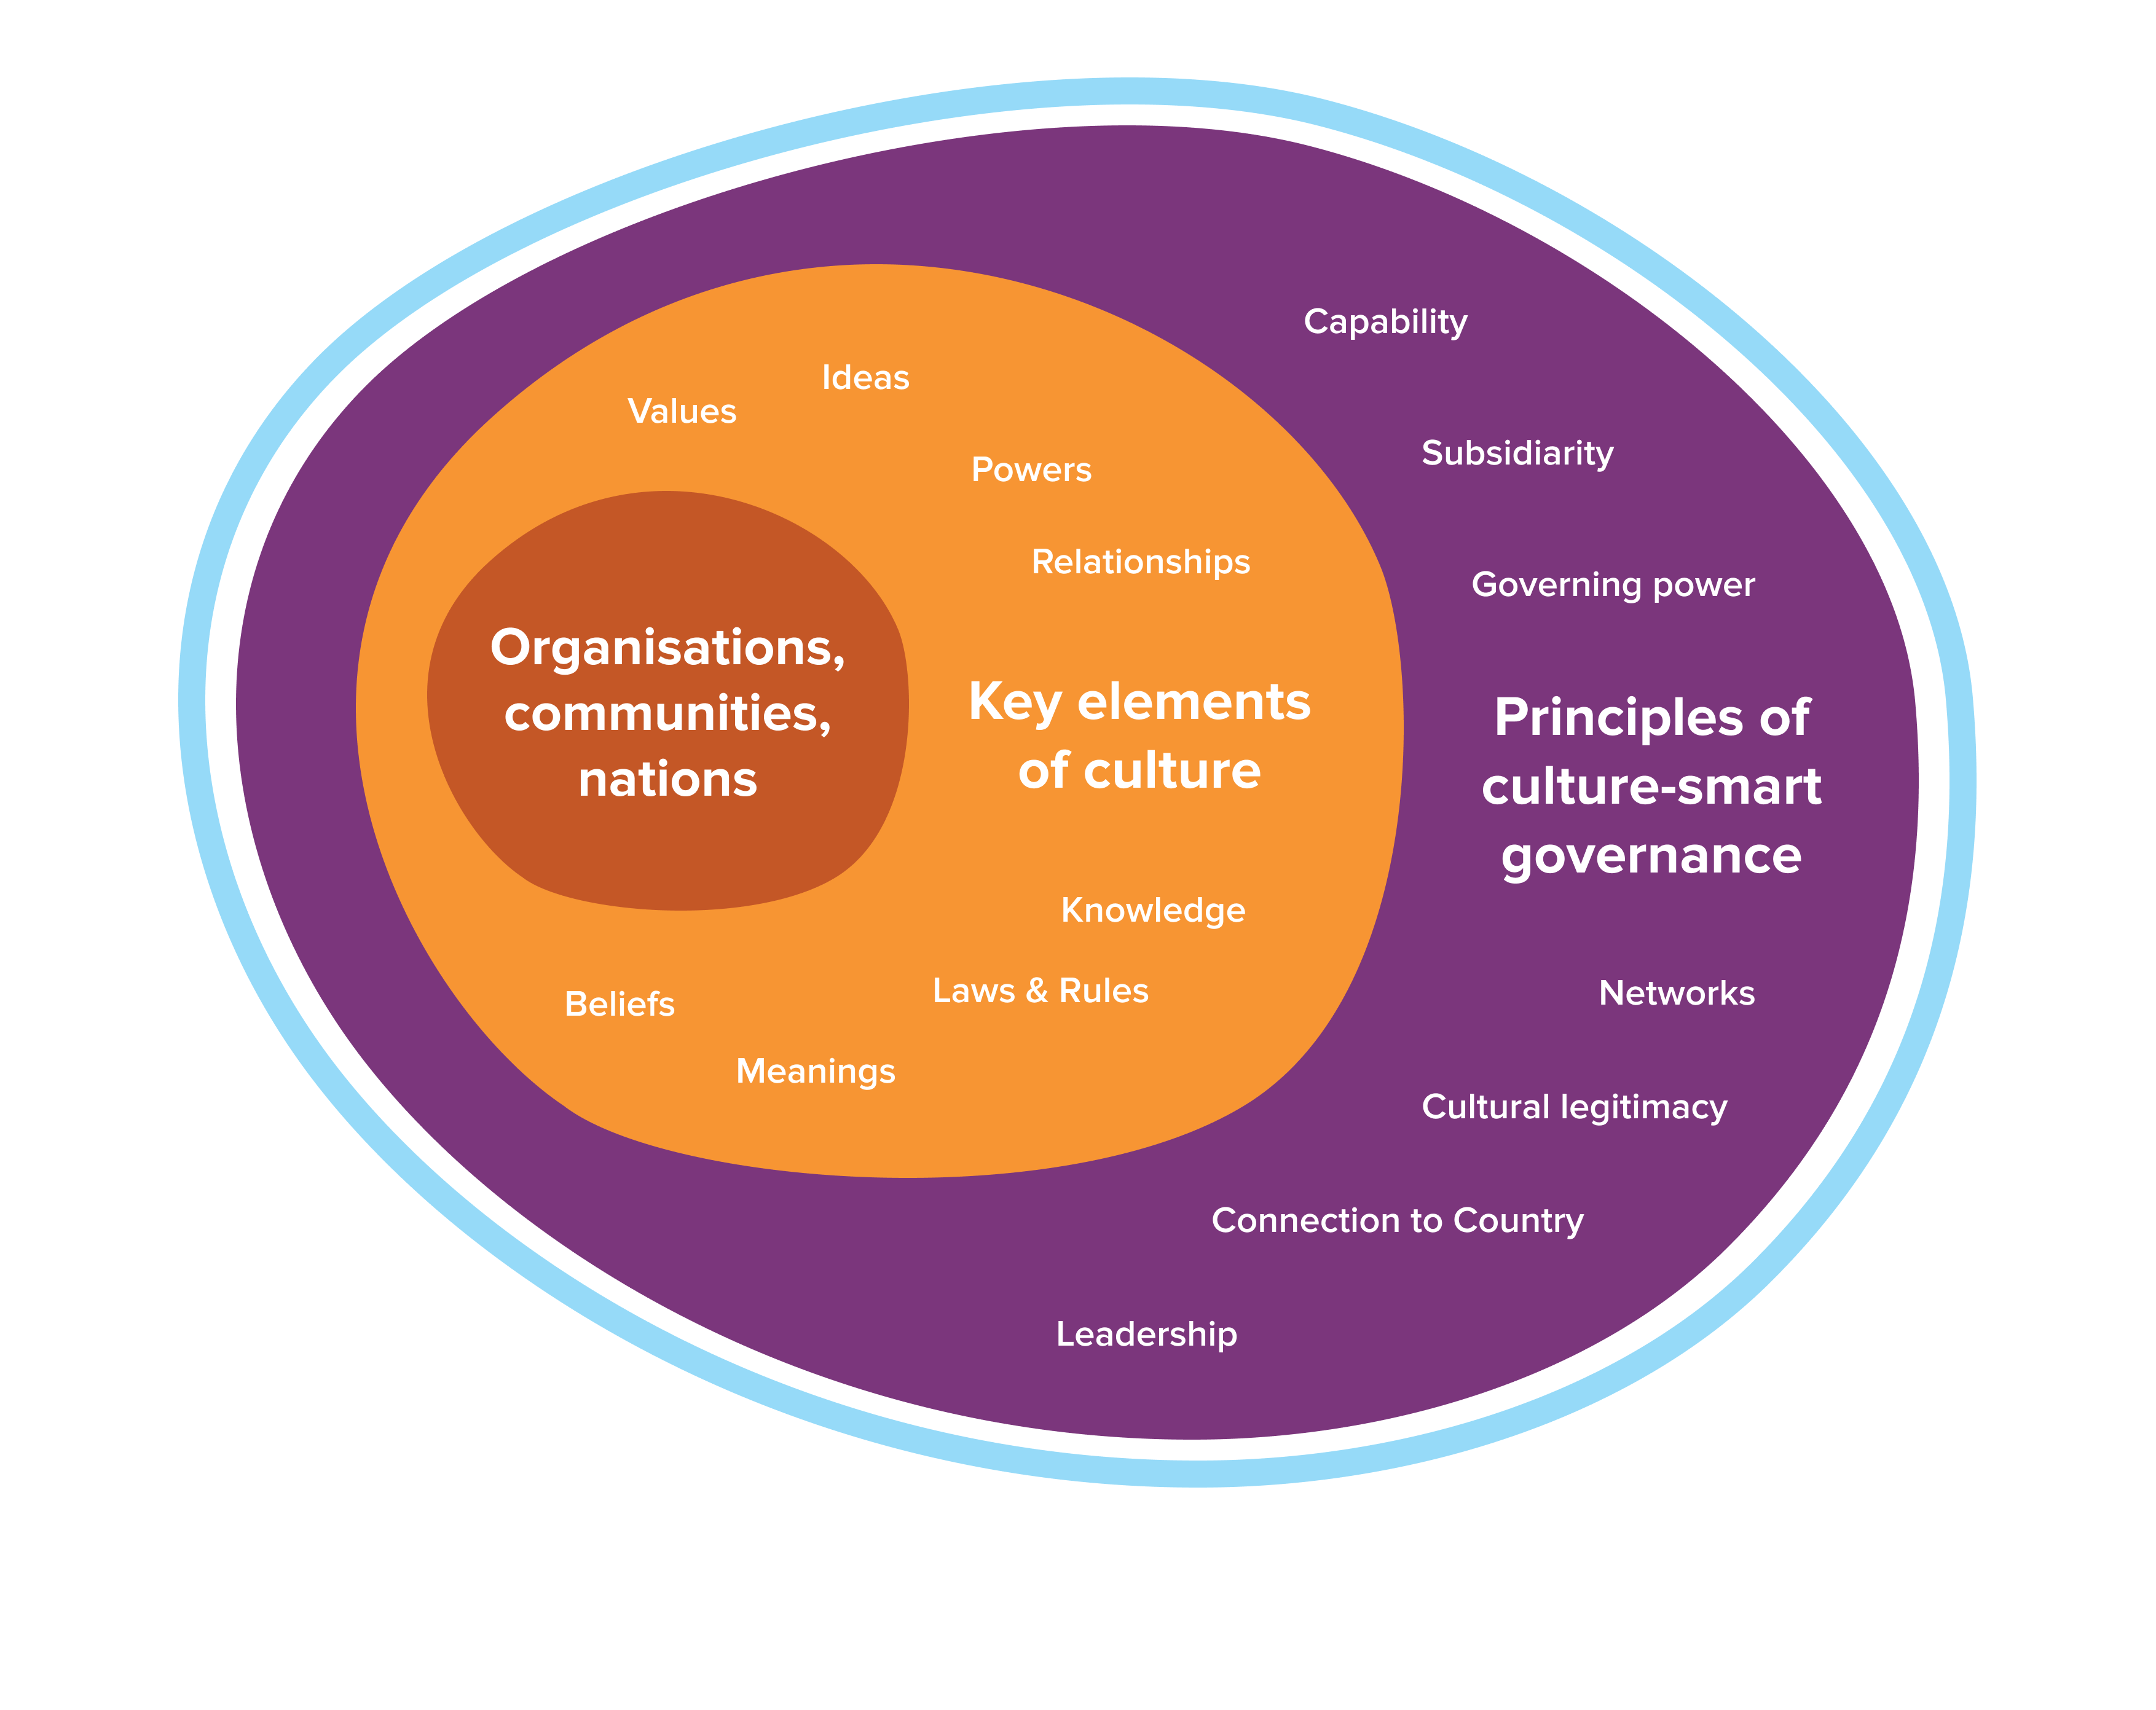 Culture-smart governance